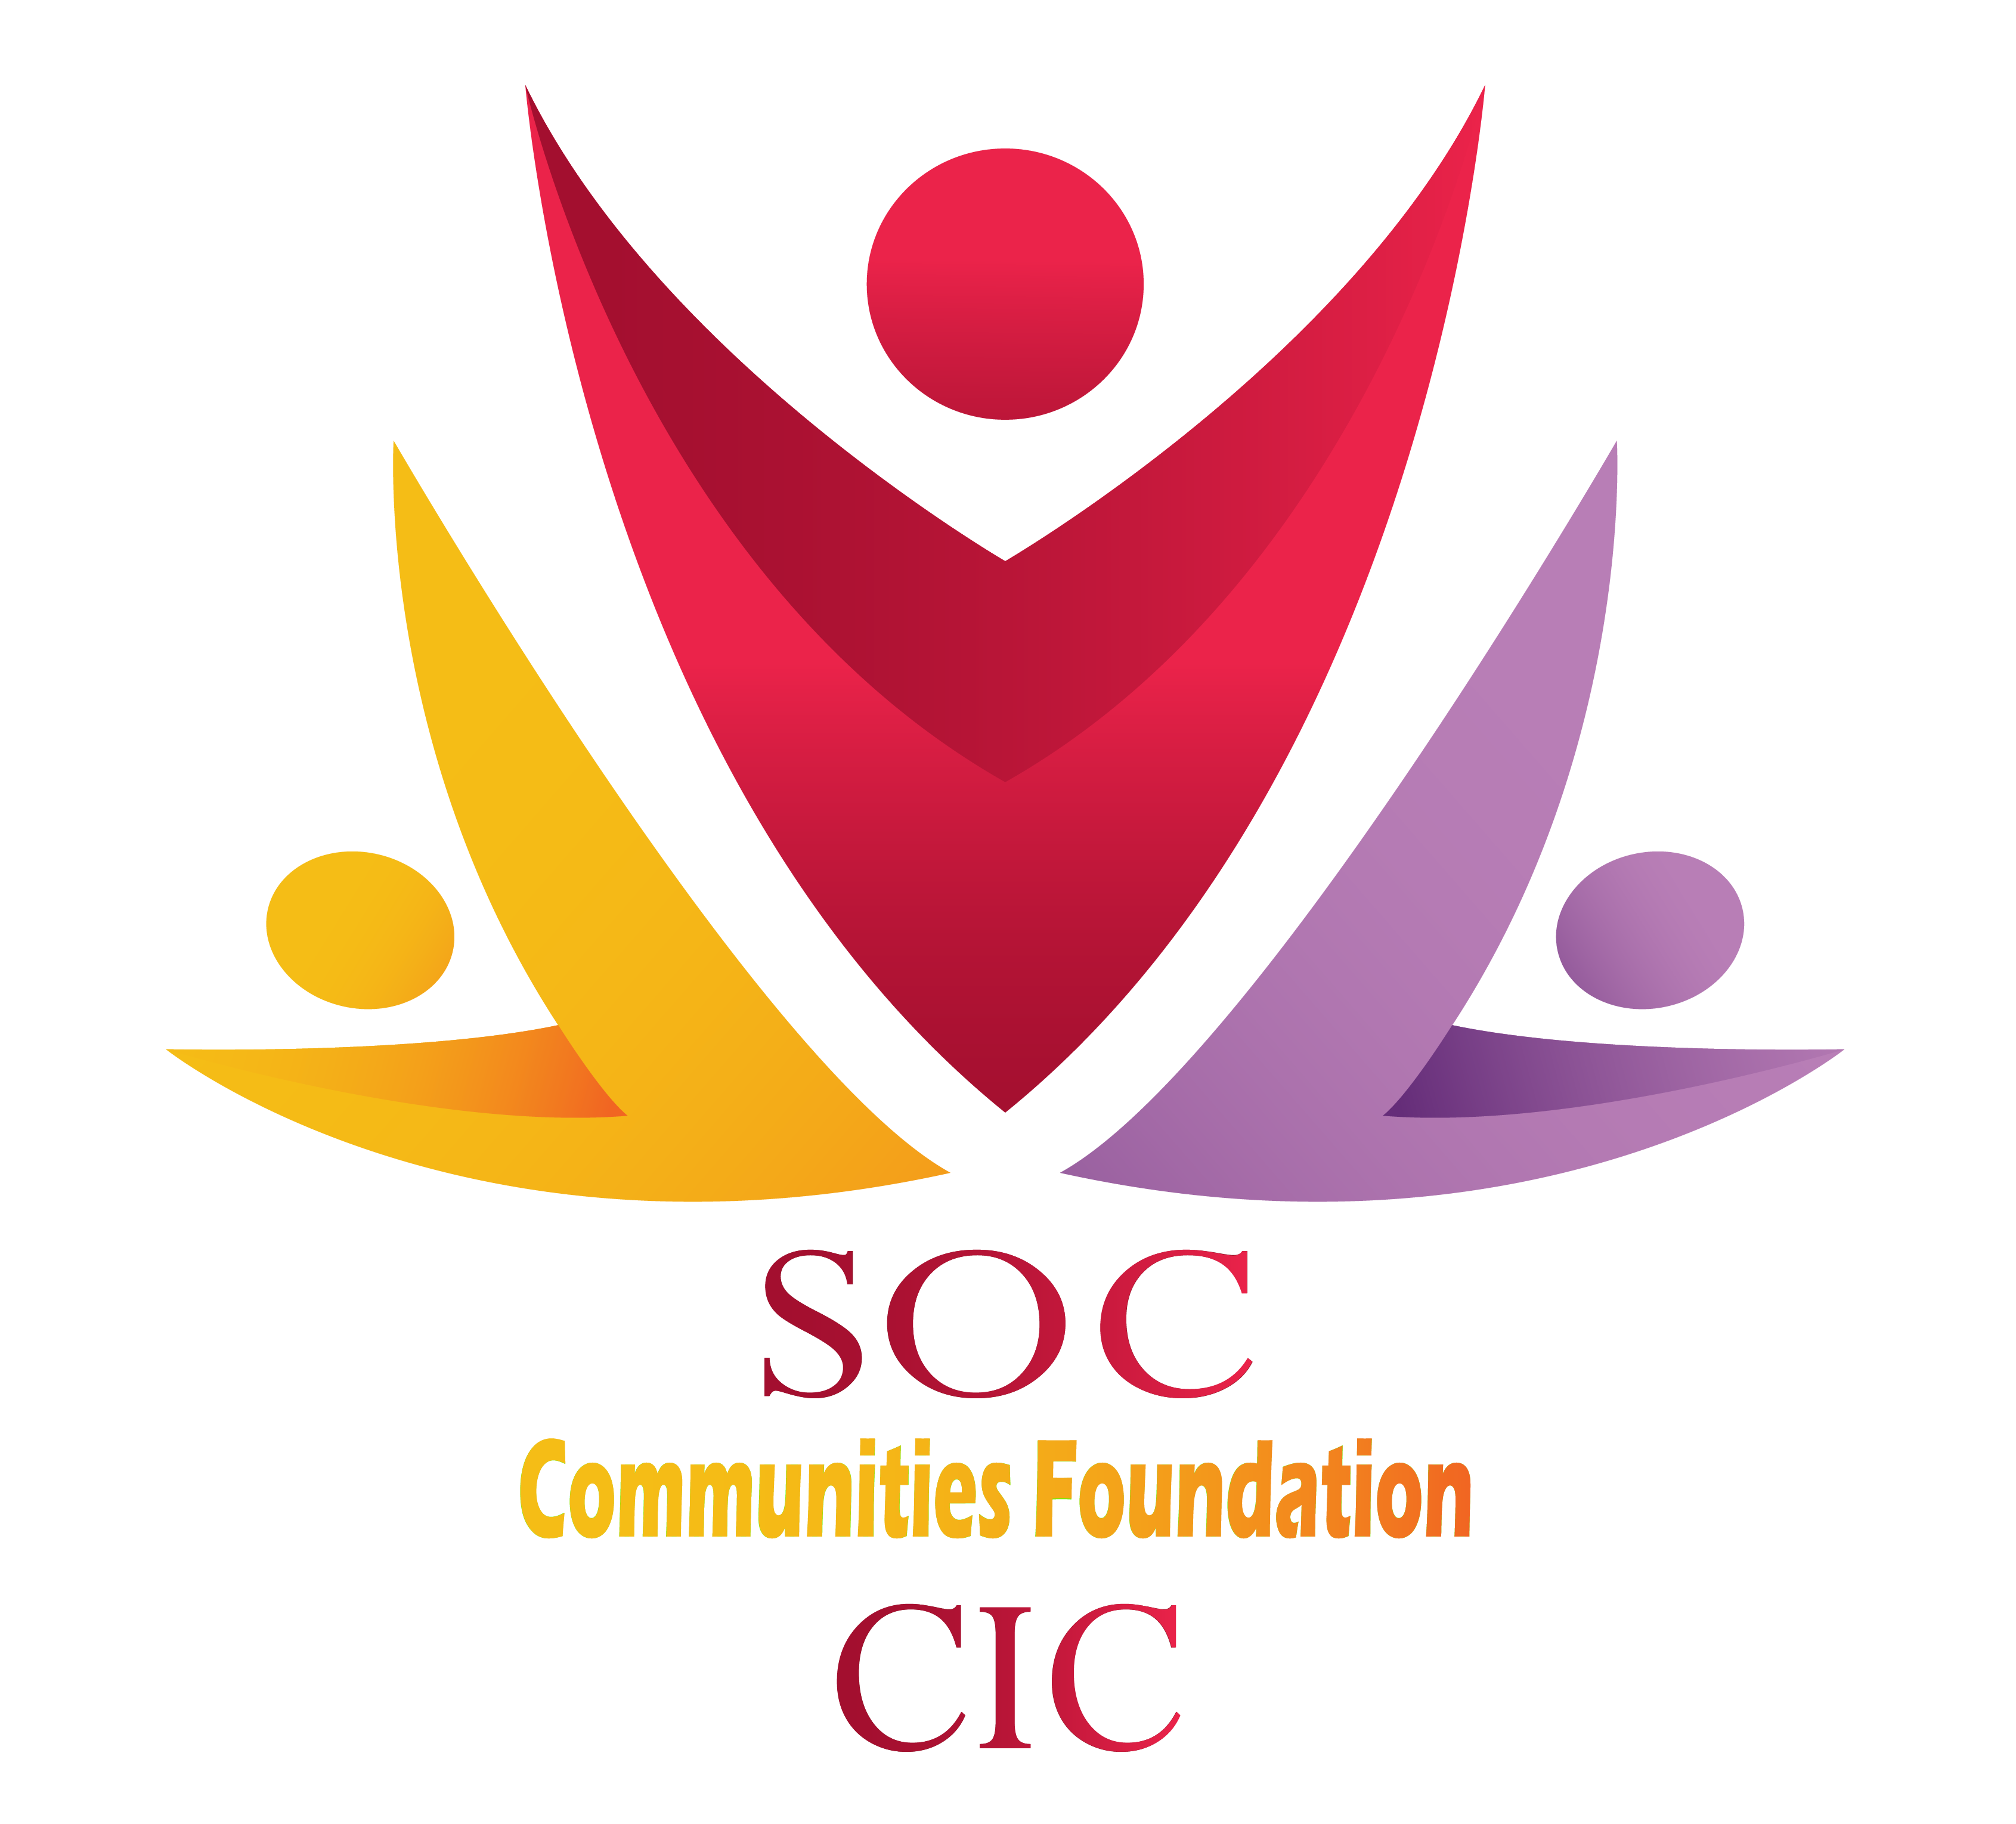 SOC COMMUNITIES FOUNDATION CIC